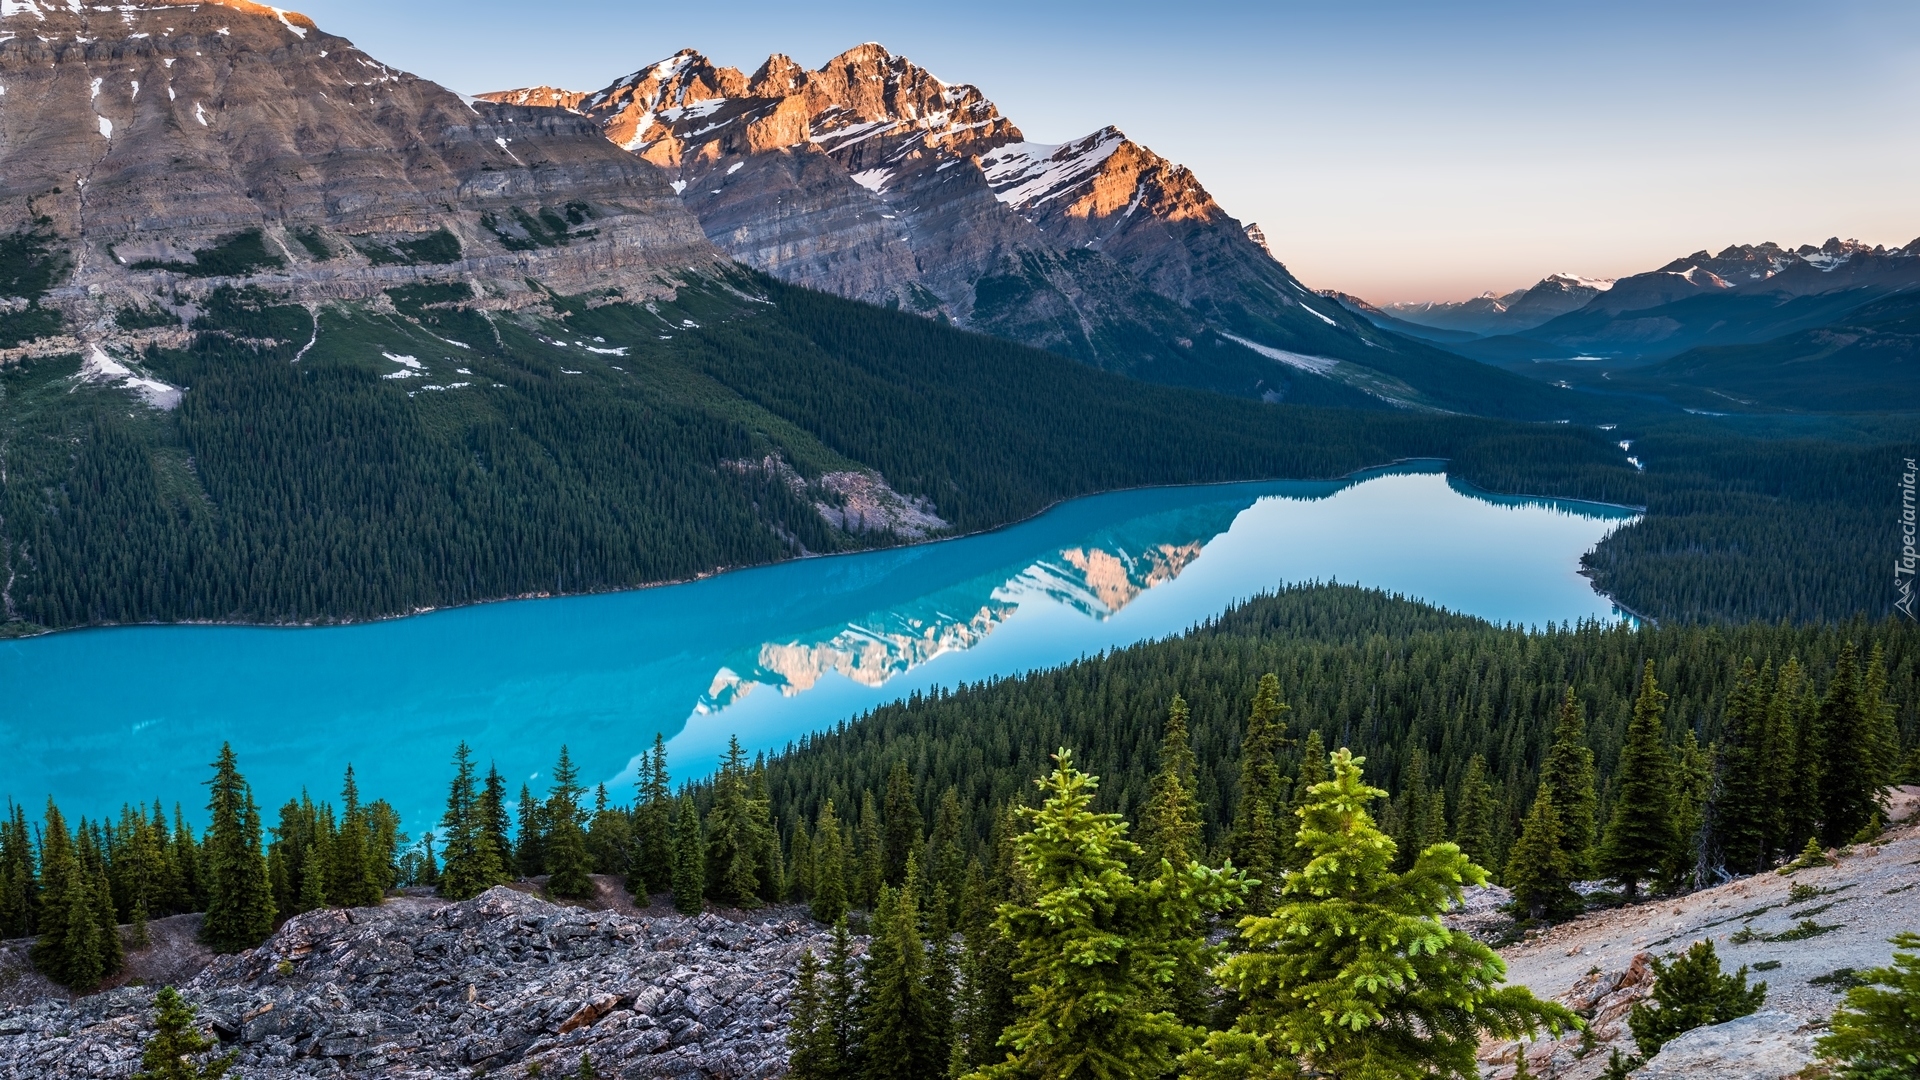 Kanada, Park Narodowy Banff, Jezioro Peyto Lake, Góry Canadian Rockies, Lasy